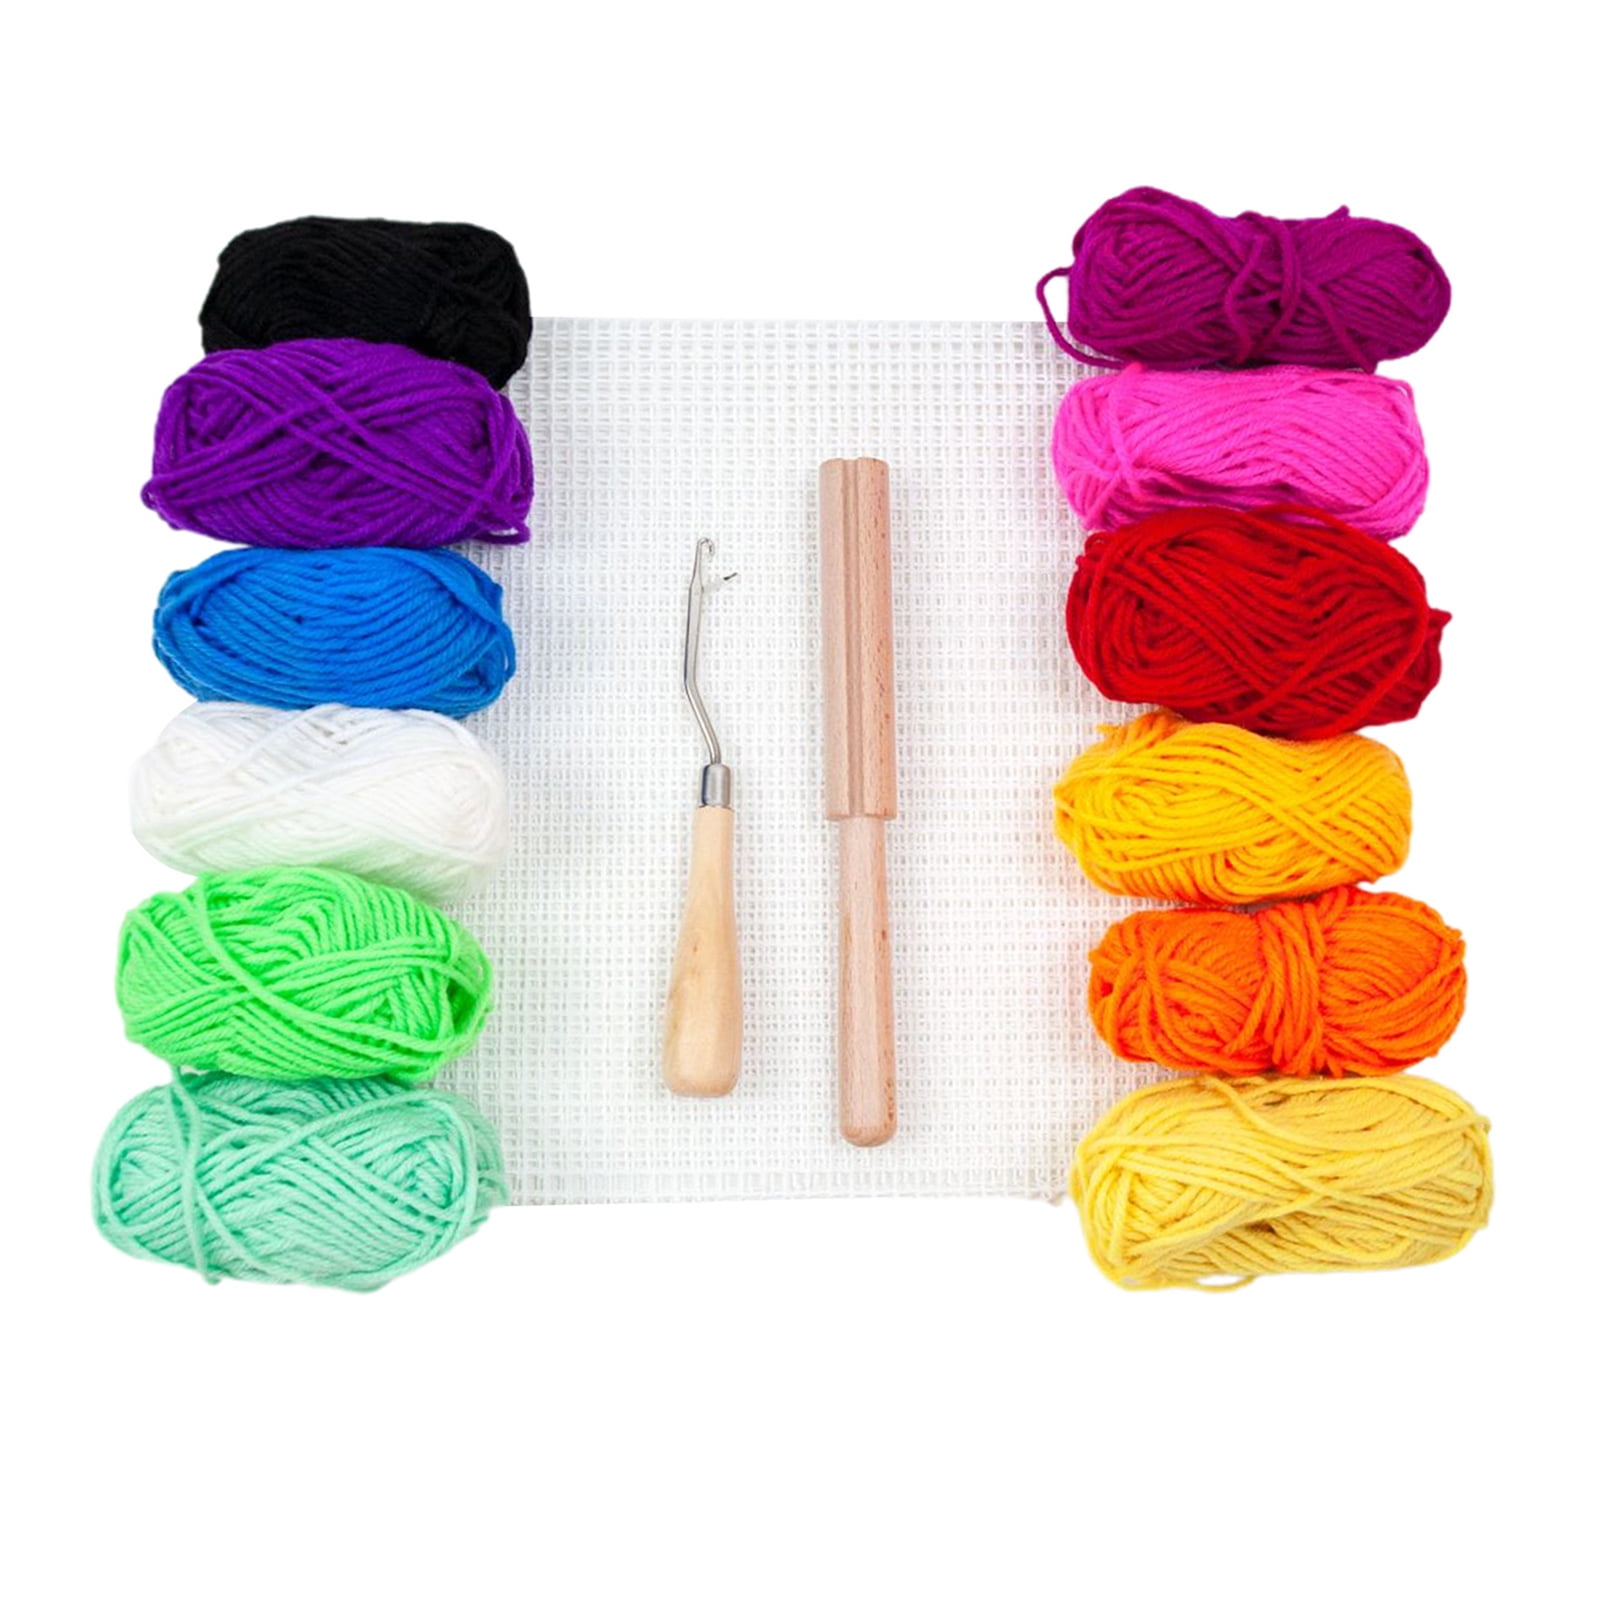 12x Latch Hook Rug Yarn S for Adults Craft Supplies DIY, Size: 50x50cm